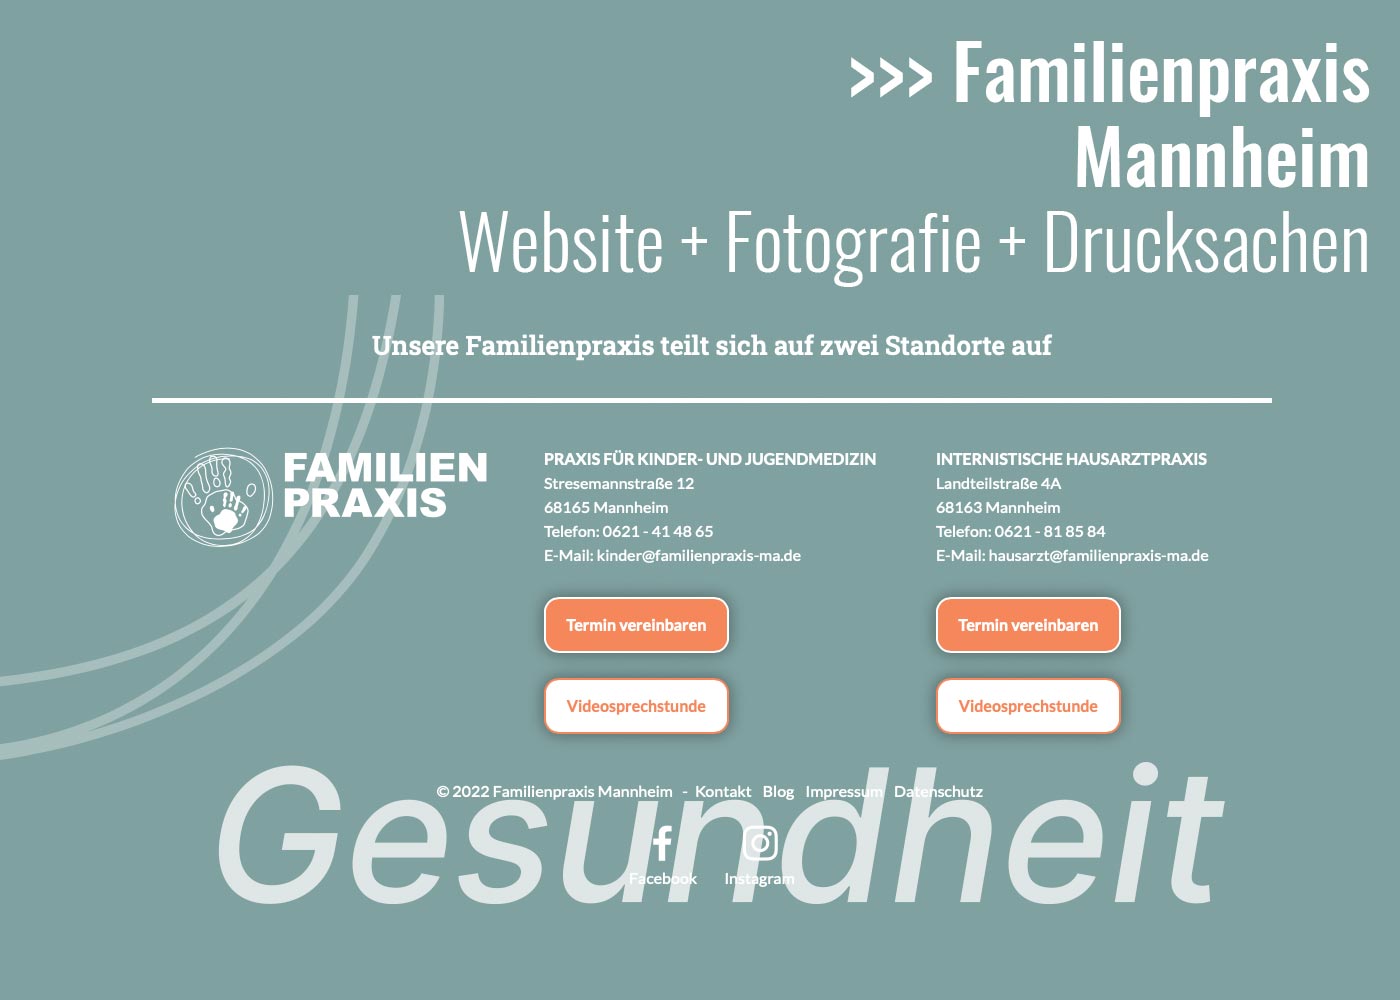 Familienpraxis Mannheim, Website - Fotografie - Drucksachen